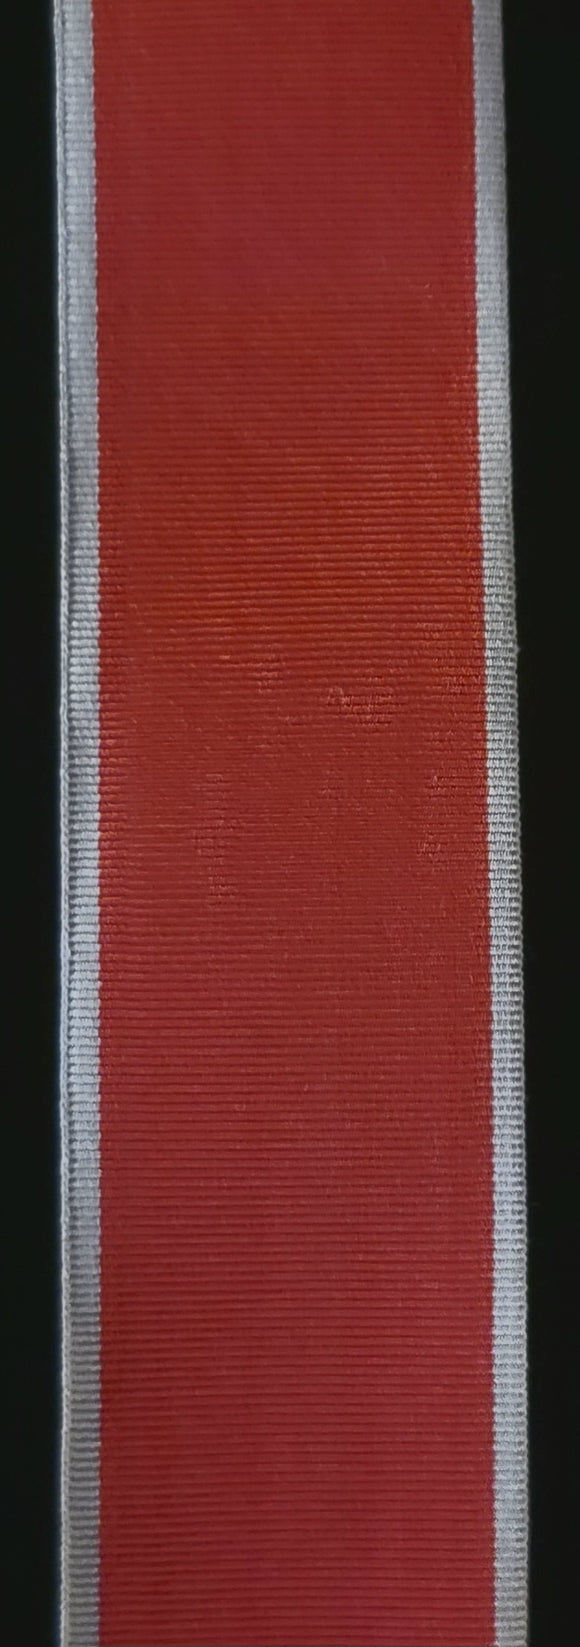 Order of the British Empire, Civil, 38mm